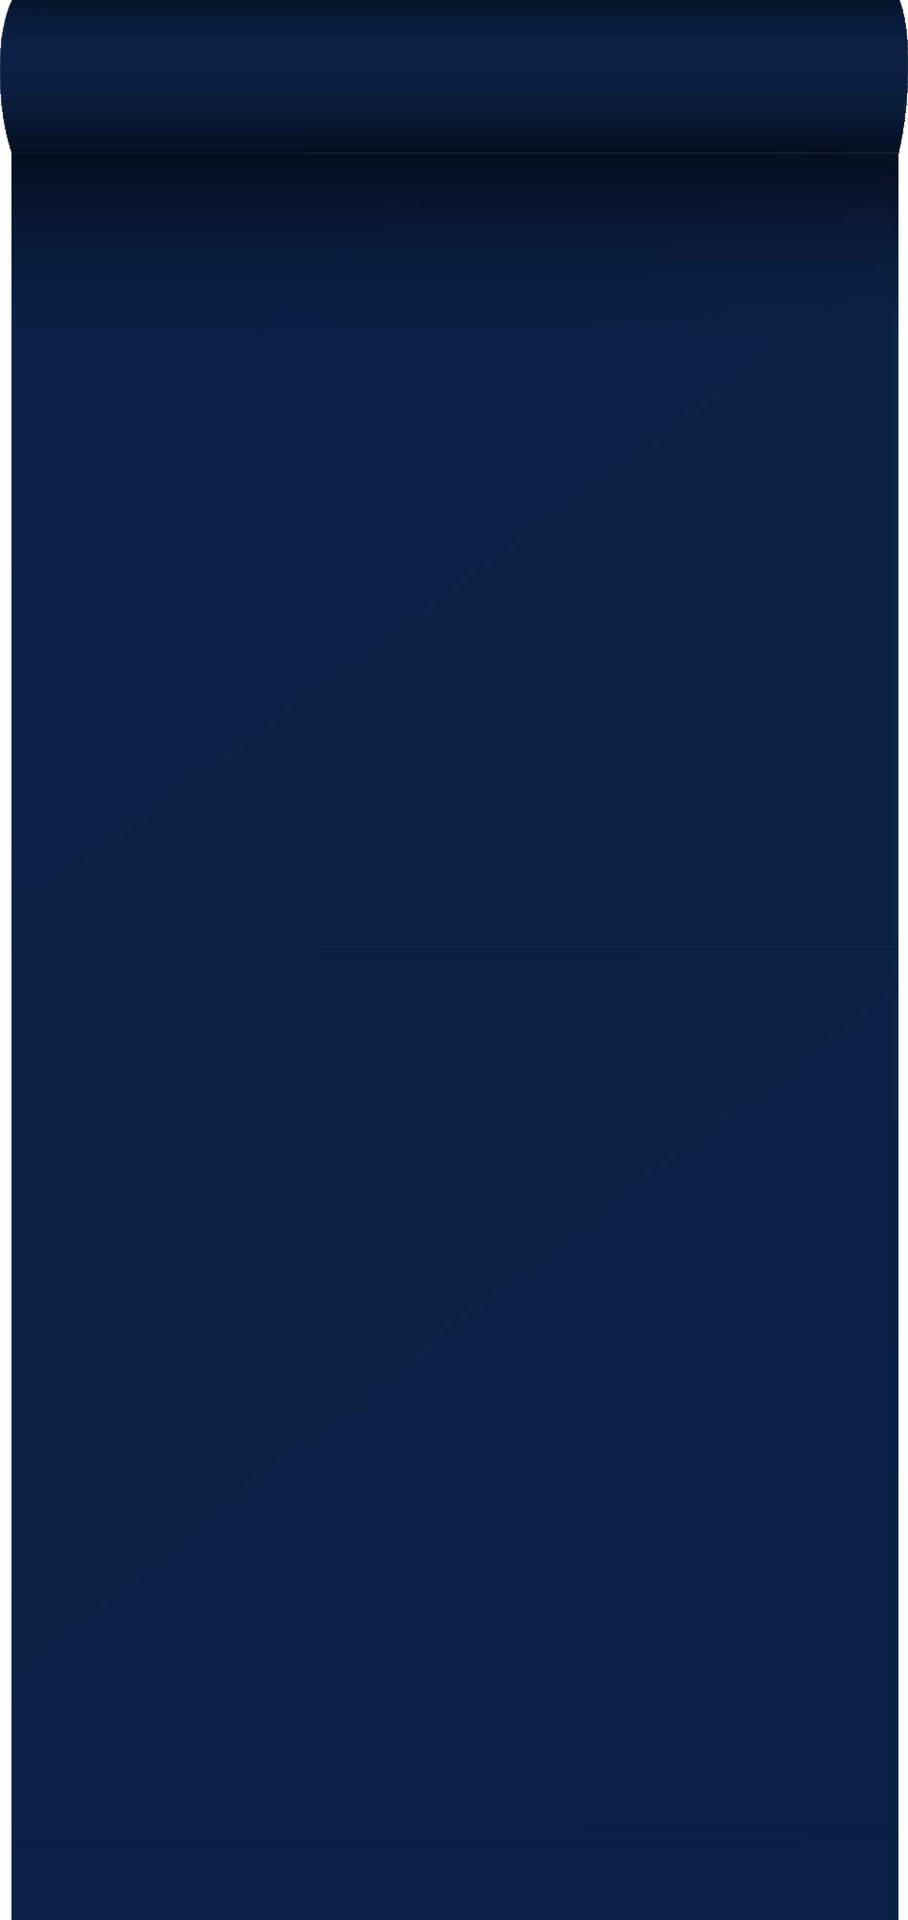 Pergaminoliso De Color Azul Oscuro. Fondo de pantalla